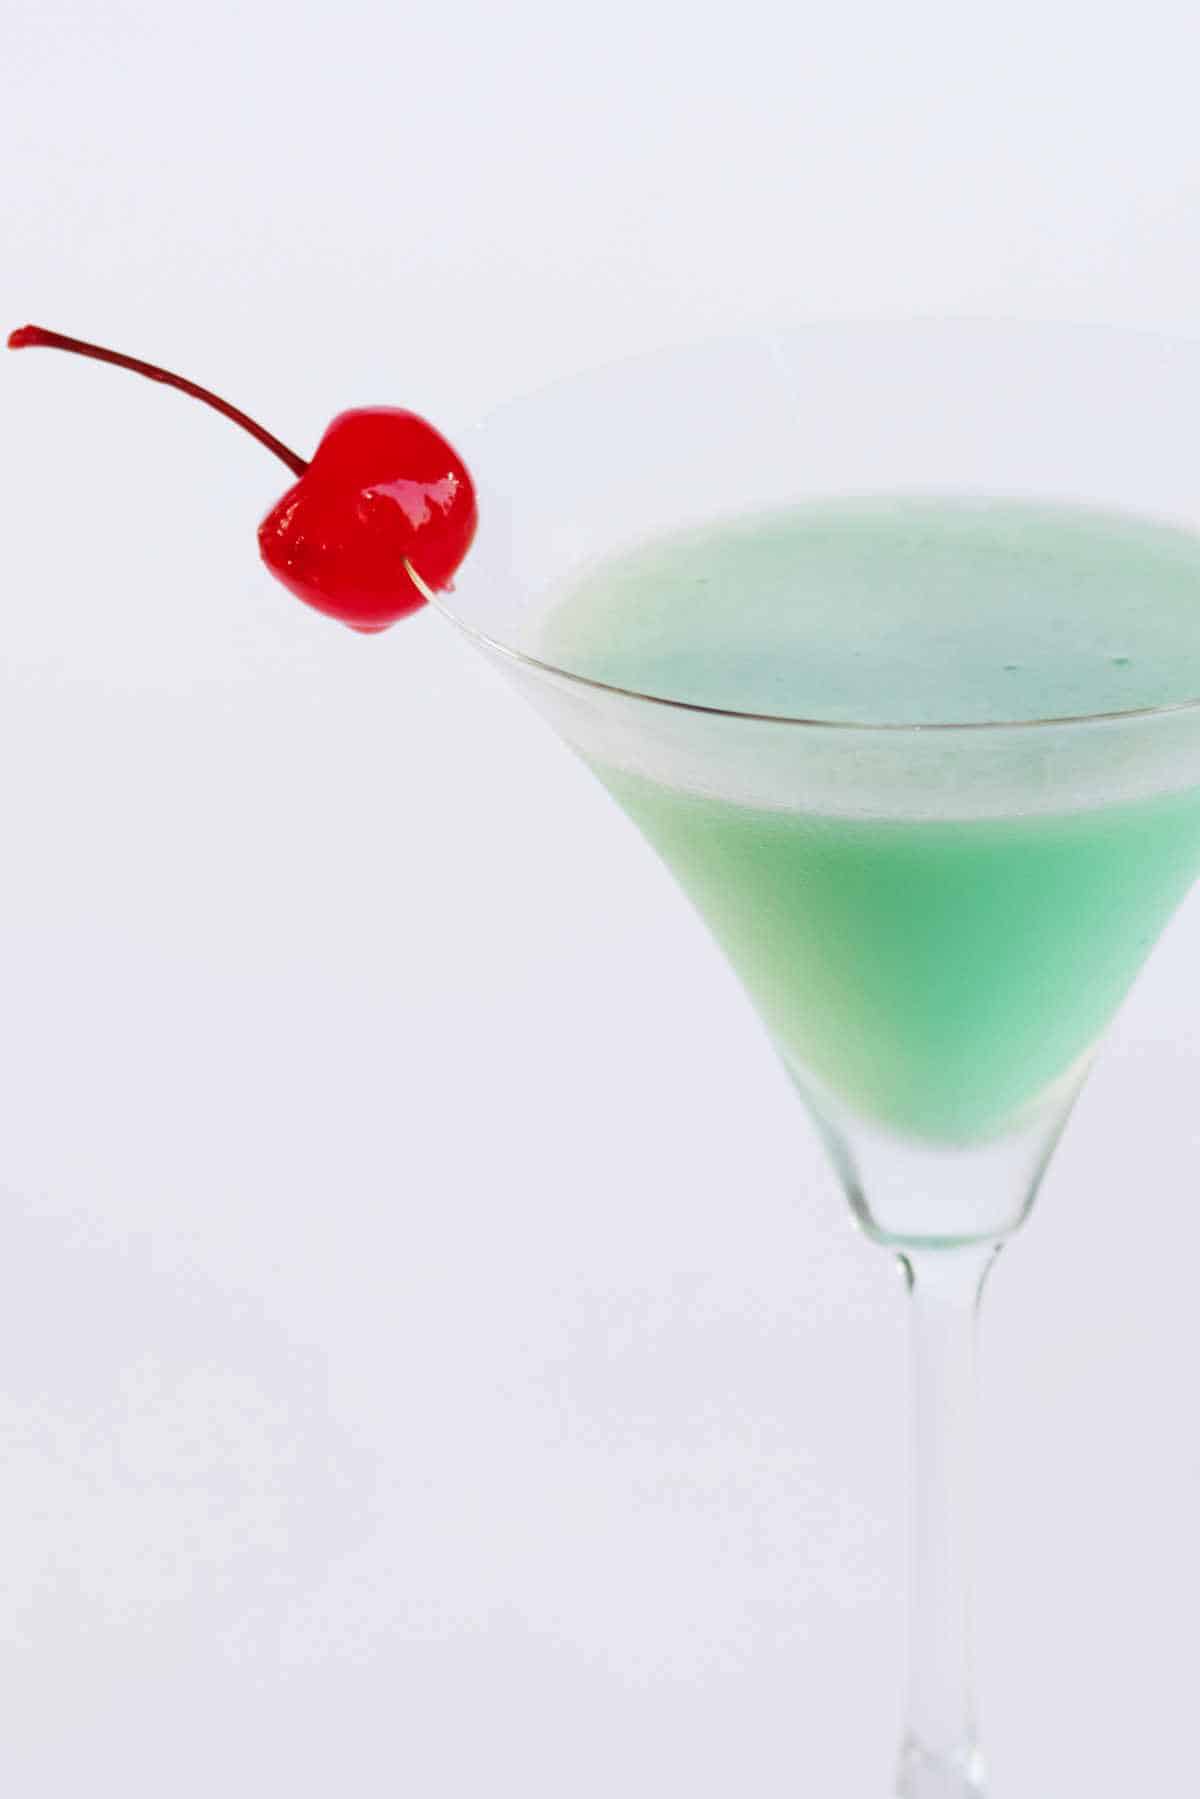 Creme de menthe grasshopper martini with a maraschino cherry garnish.